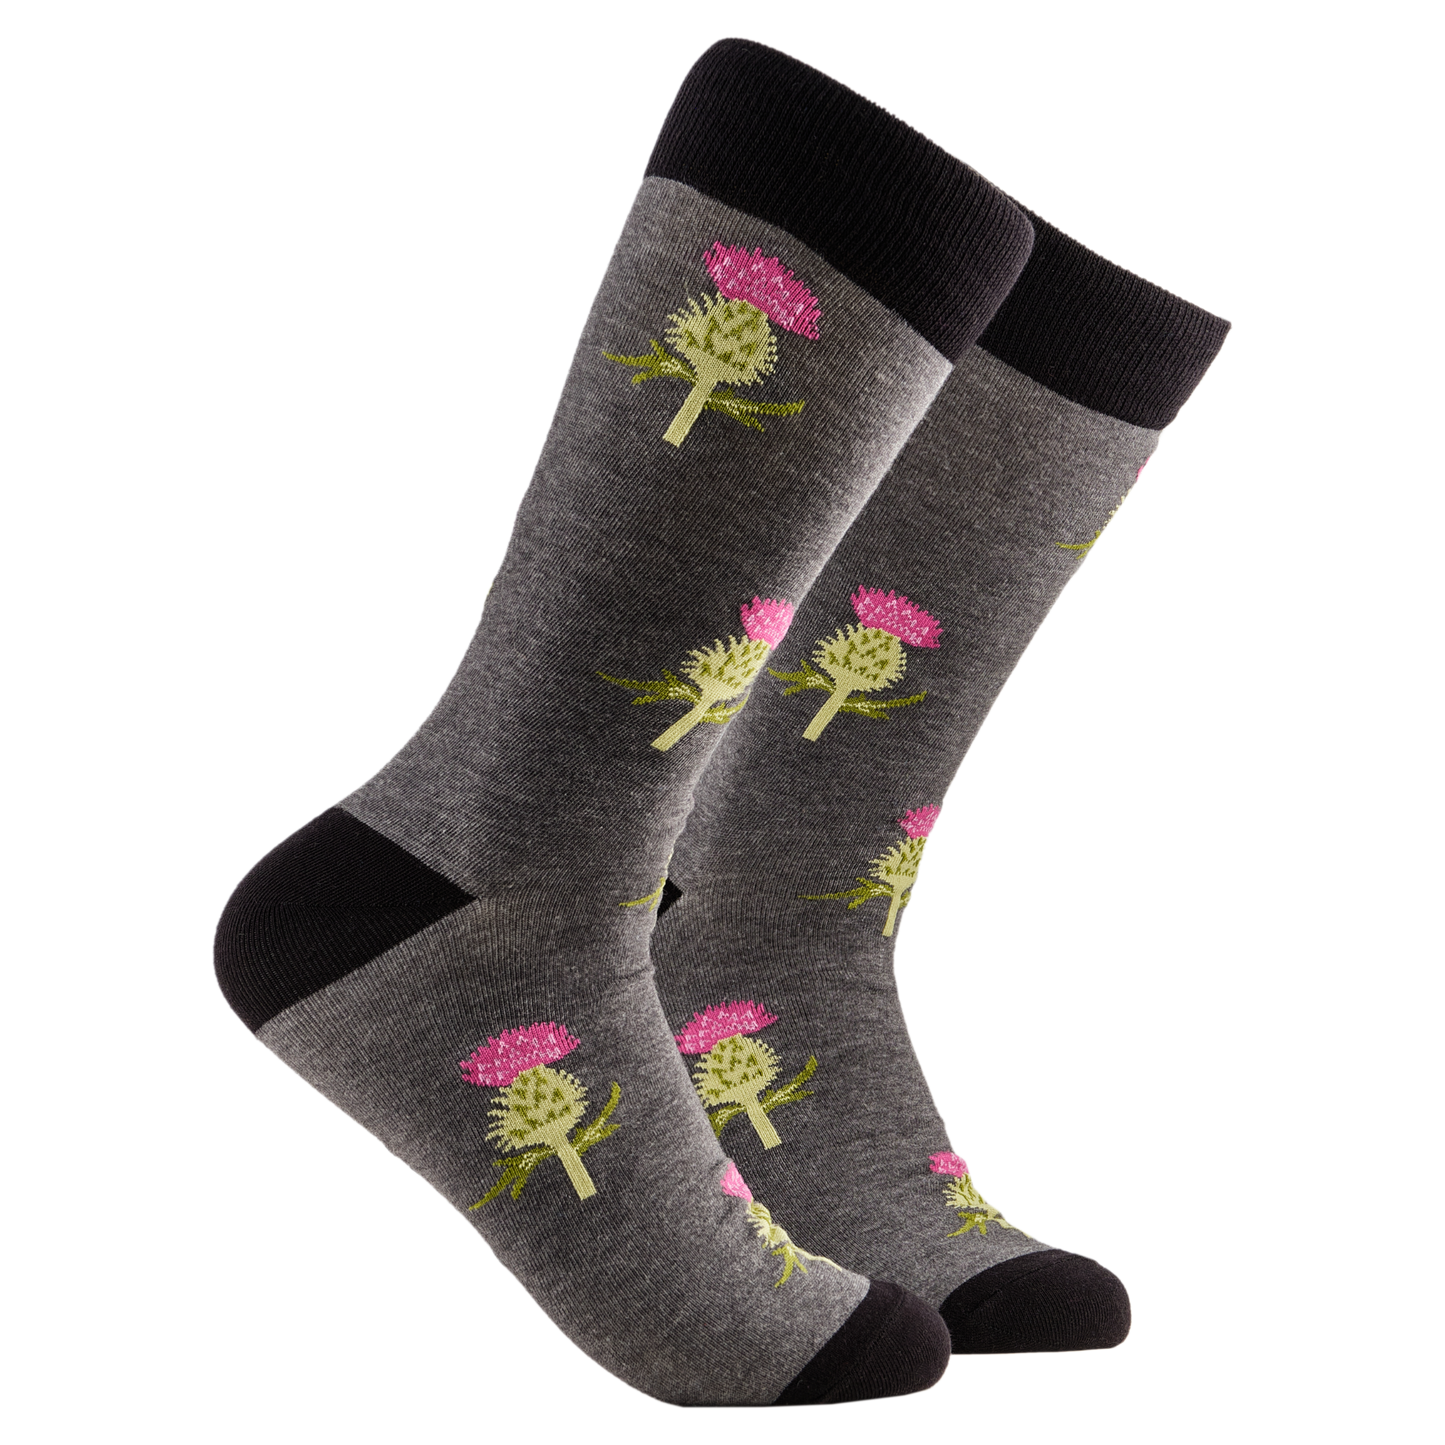 A pair of socks depicting thistles. Grey legs, black cuff, heel and toe.